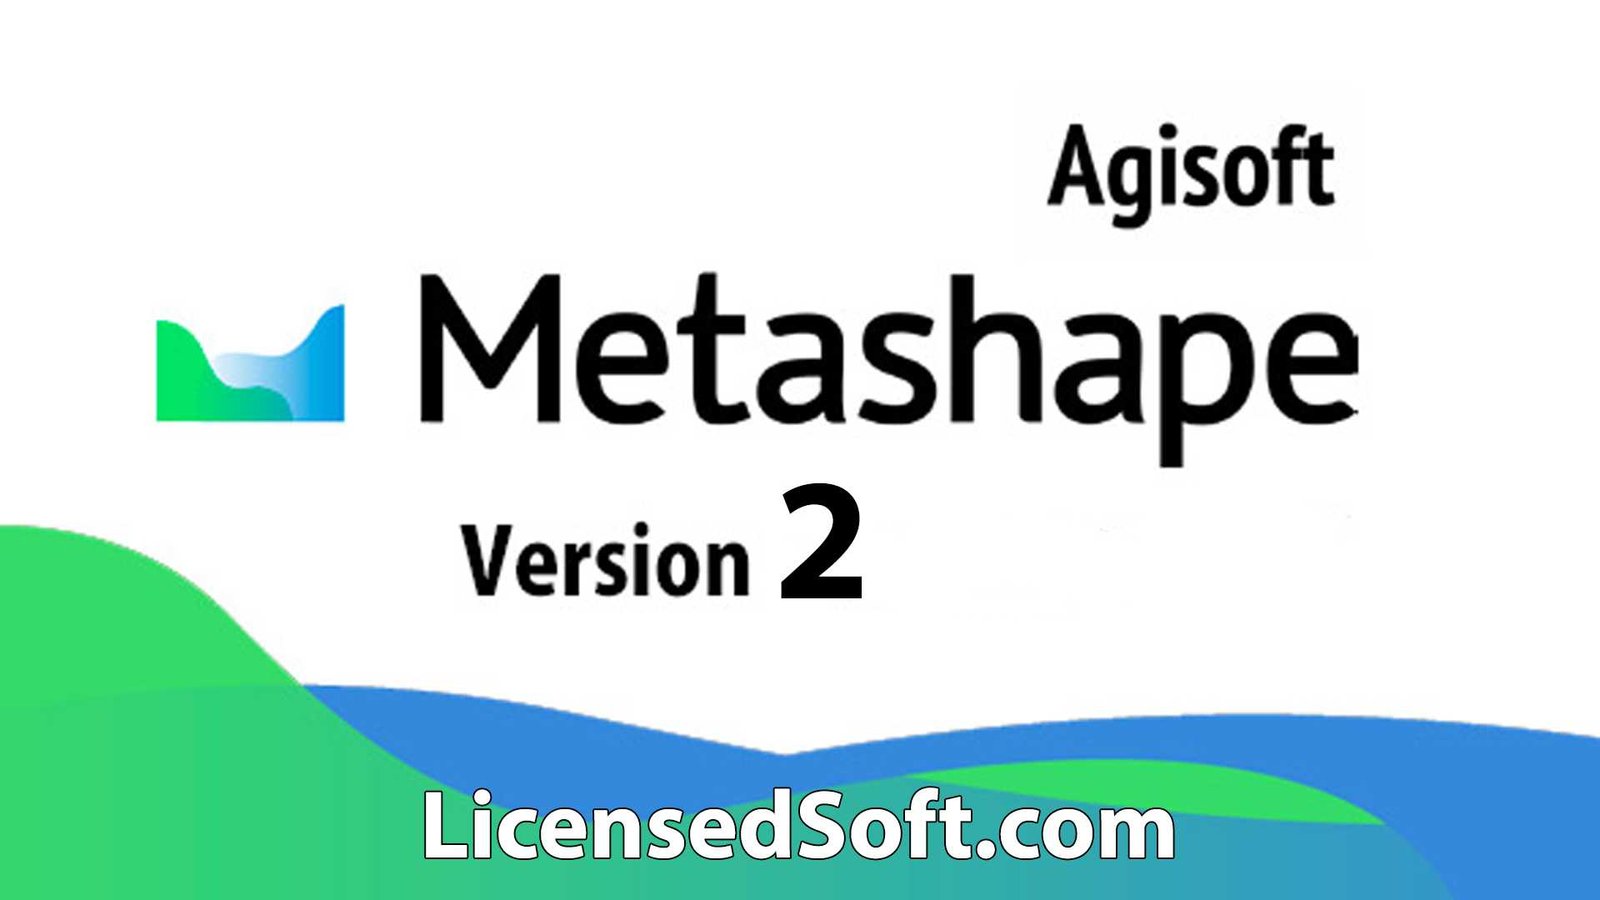 Agisoft Metashape Professional 2.0.2 Lifetime License By LicensedSoft